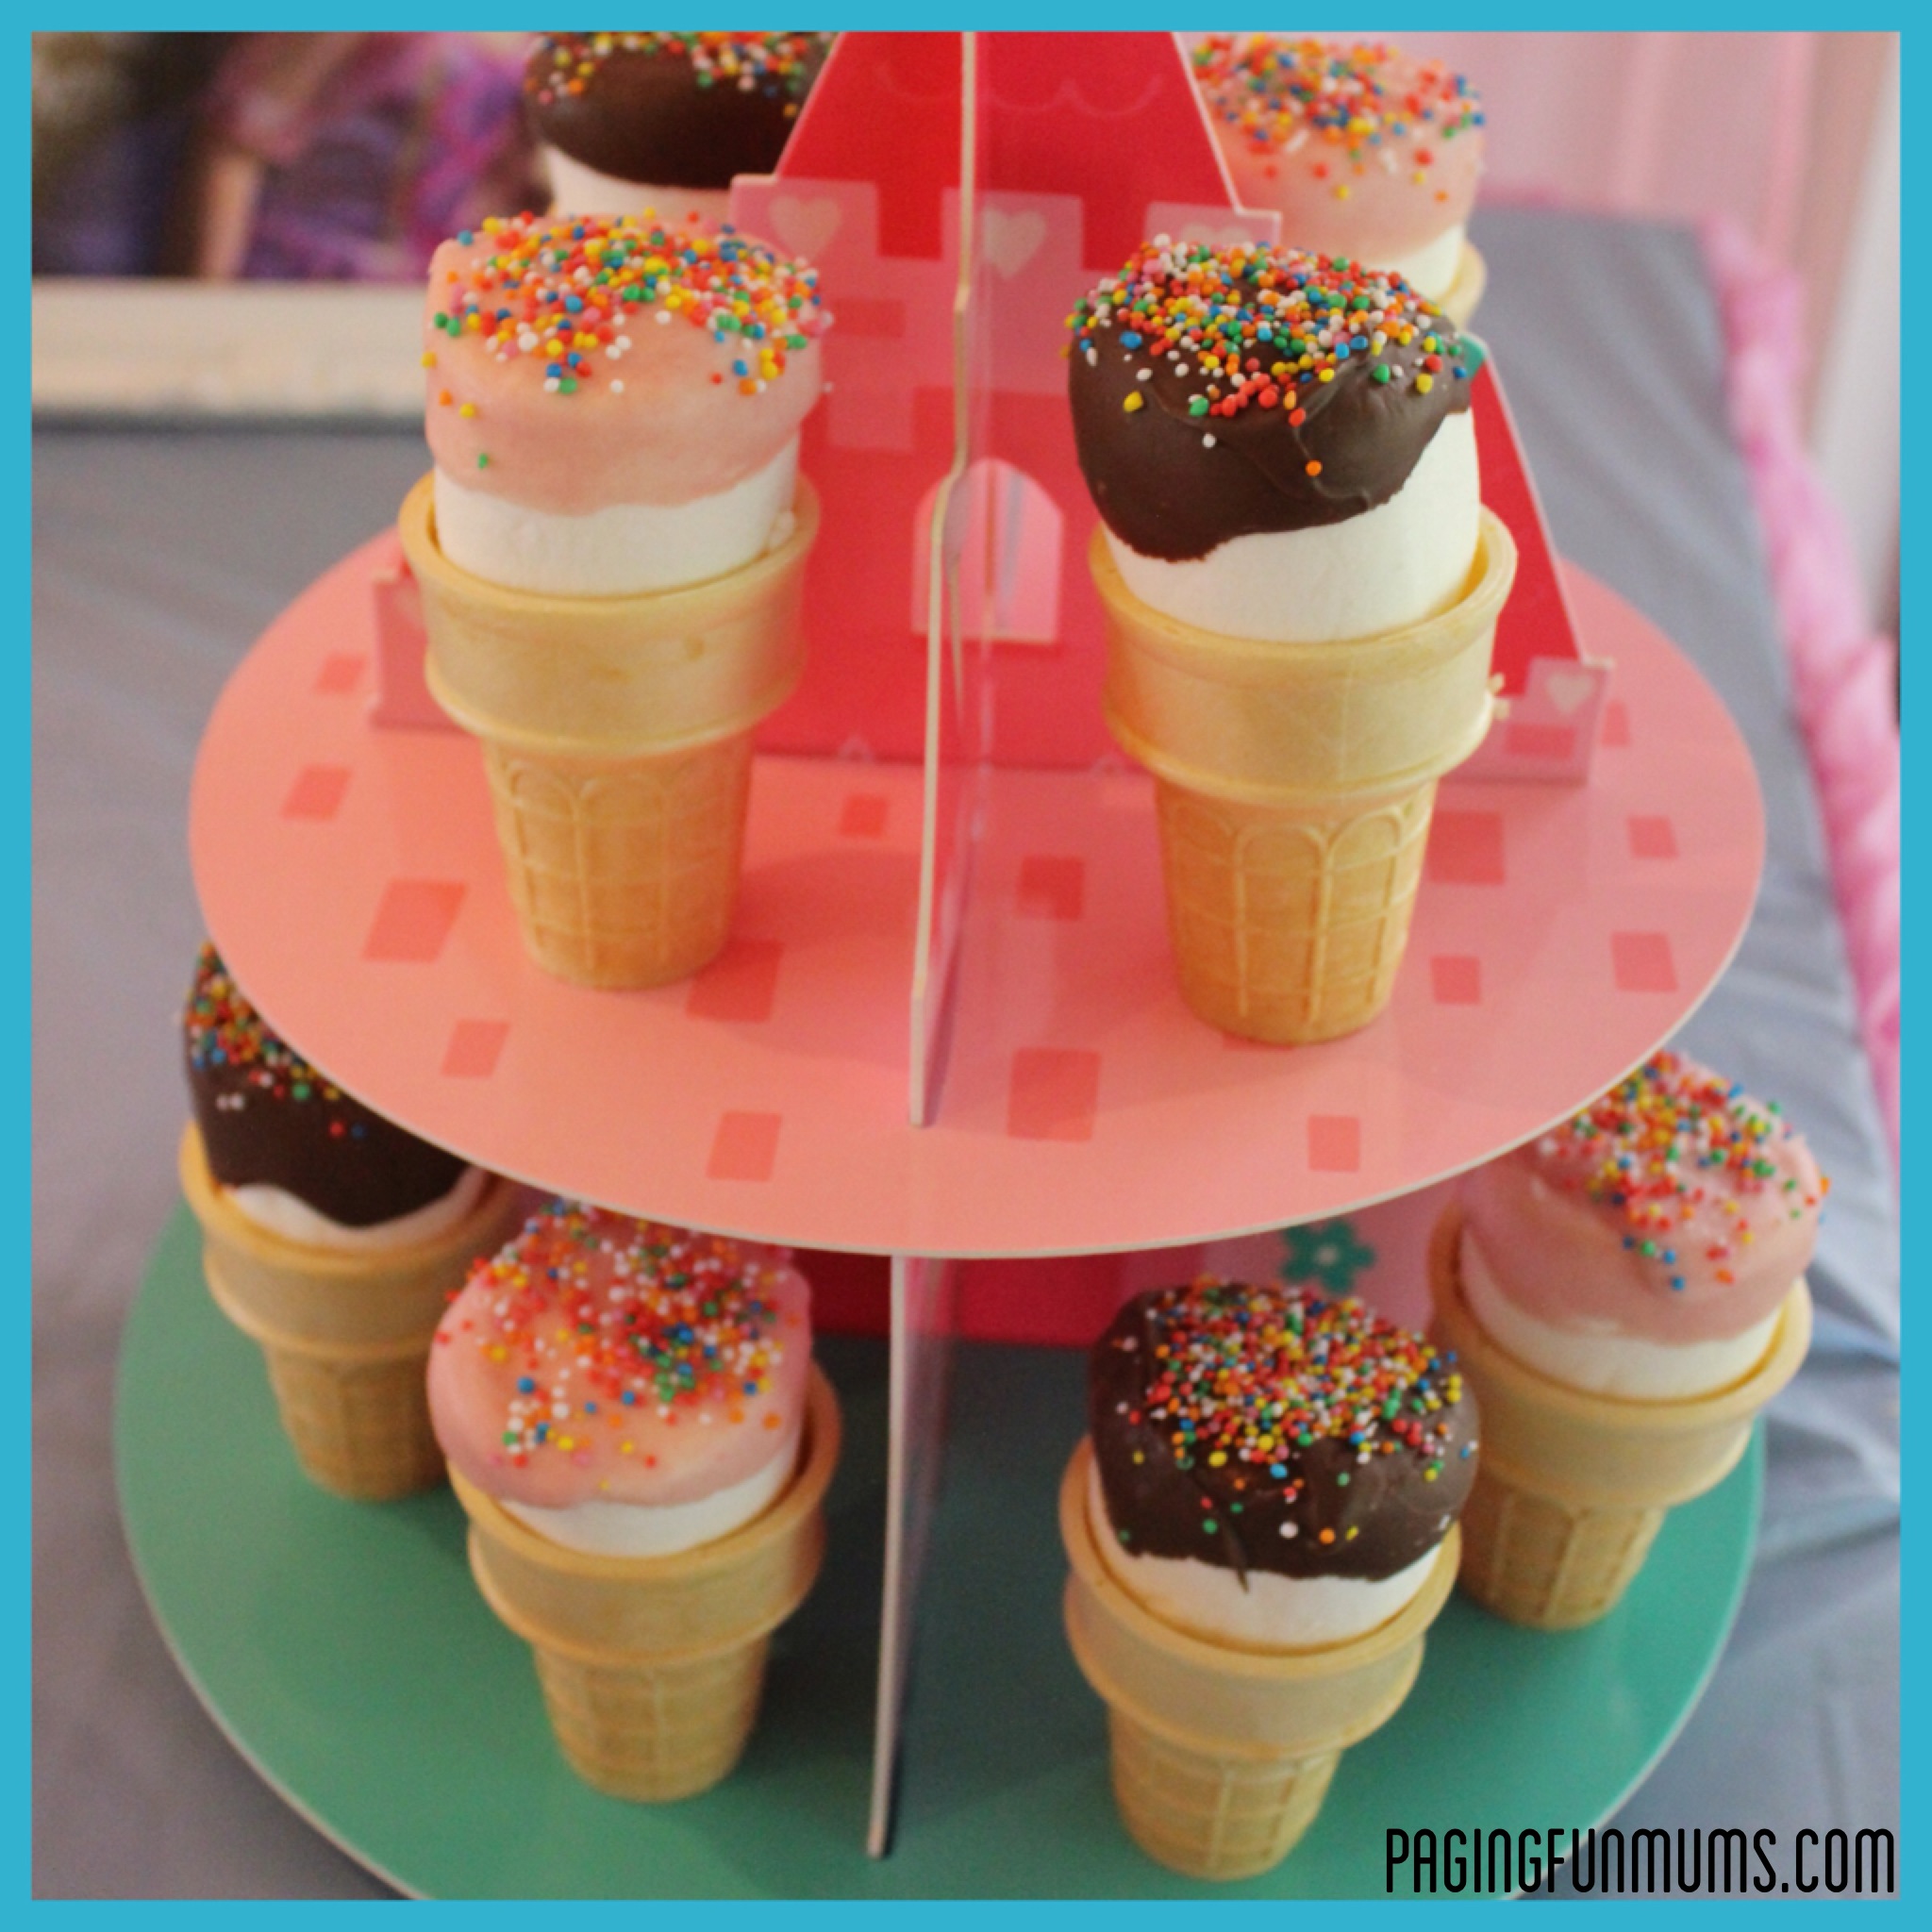 Marshmallow Ice Cream Cones